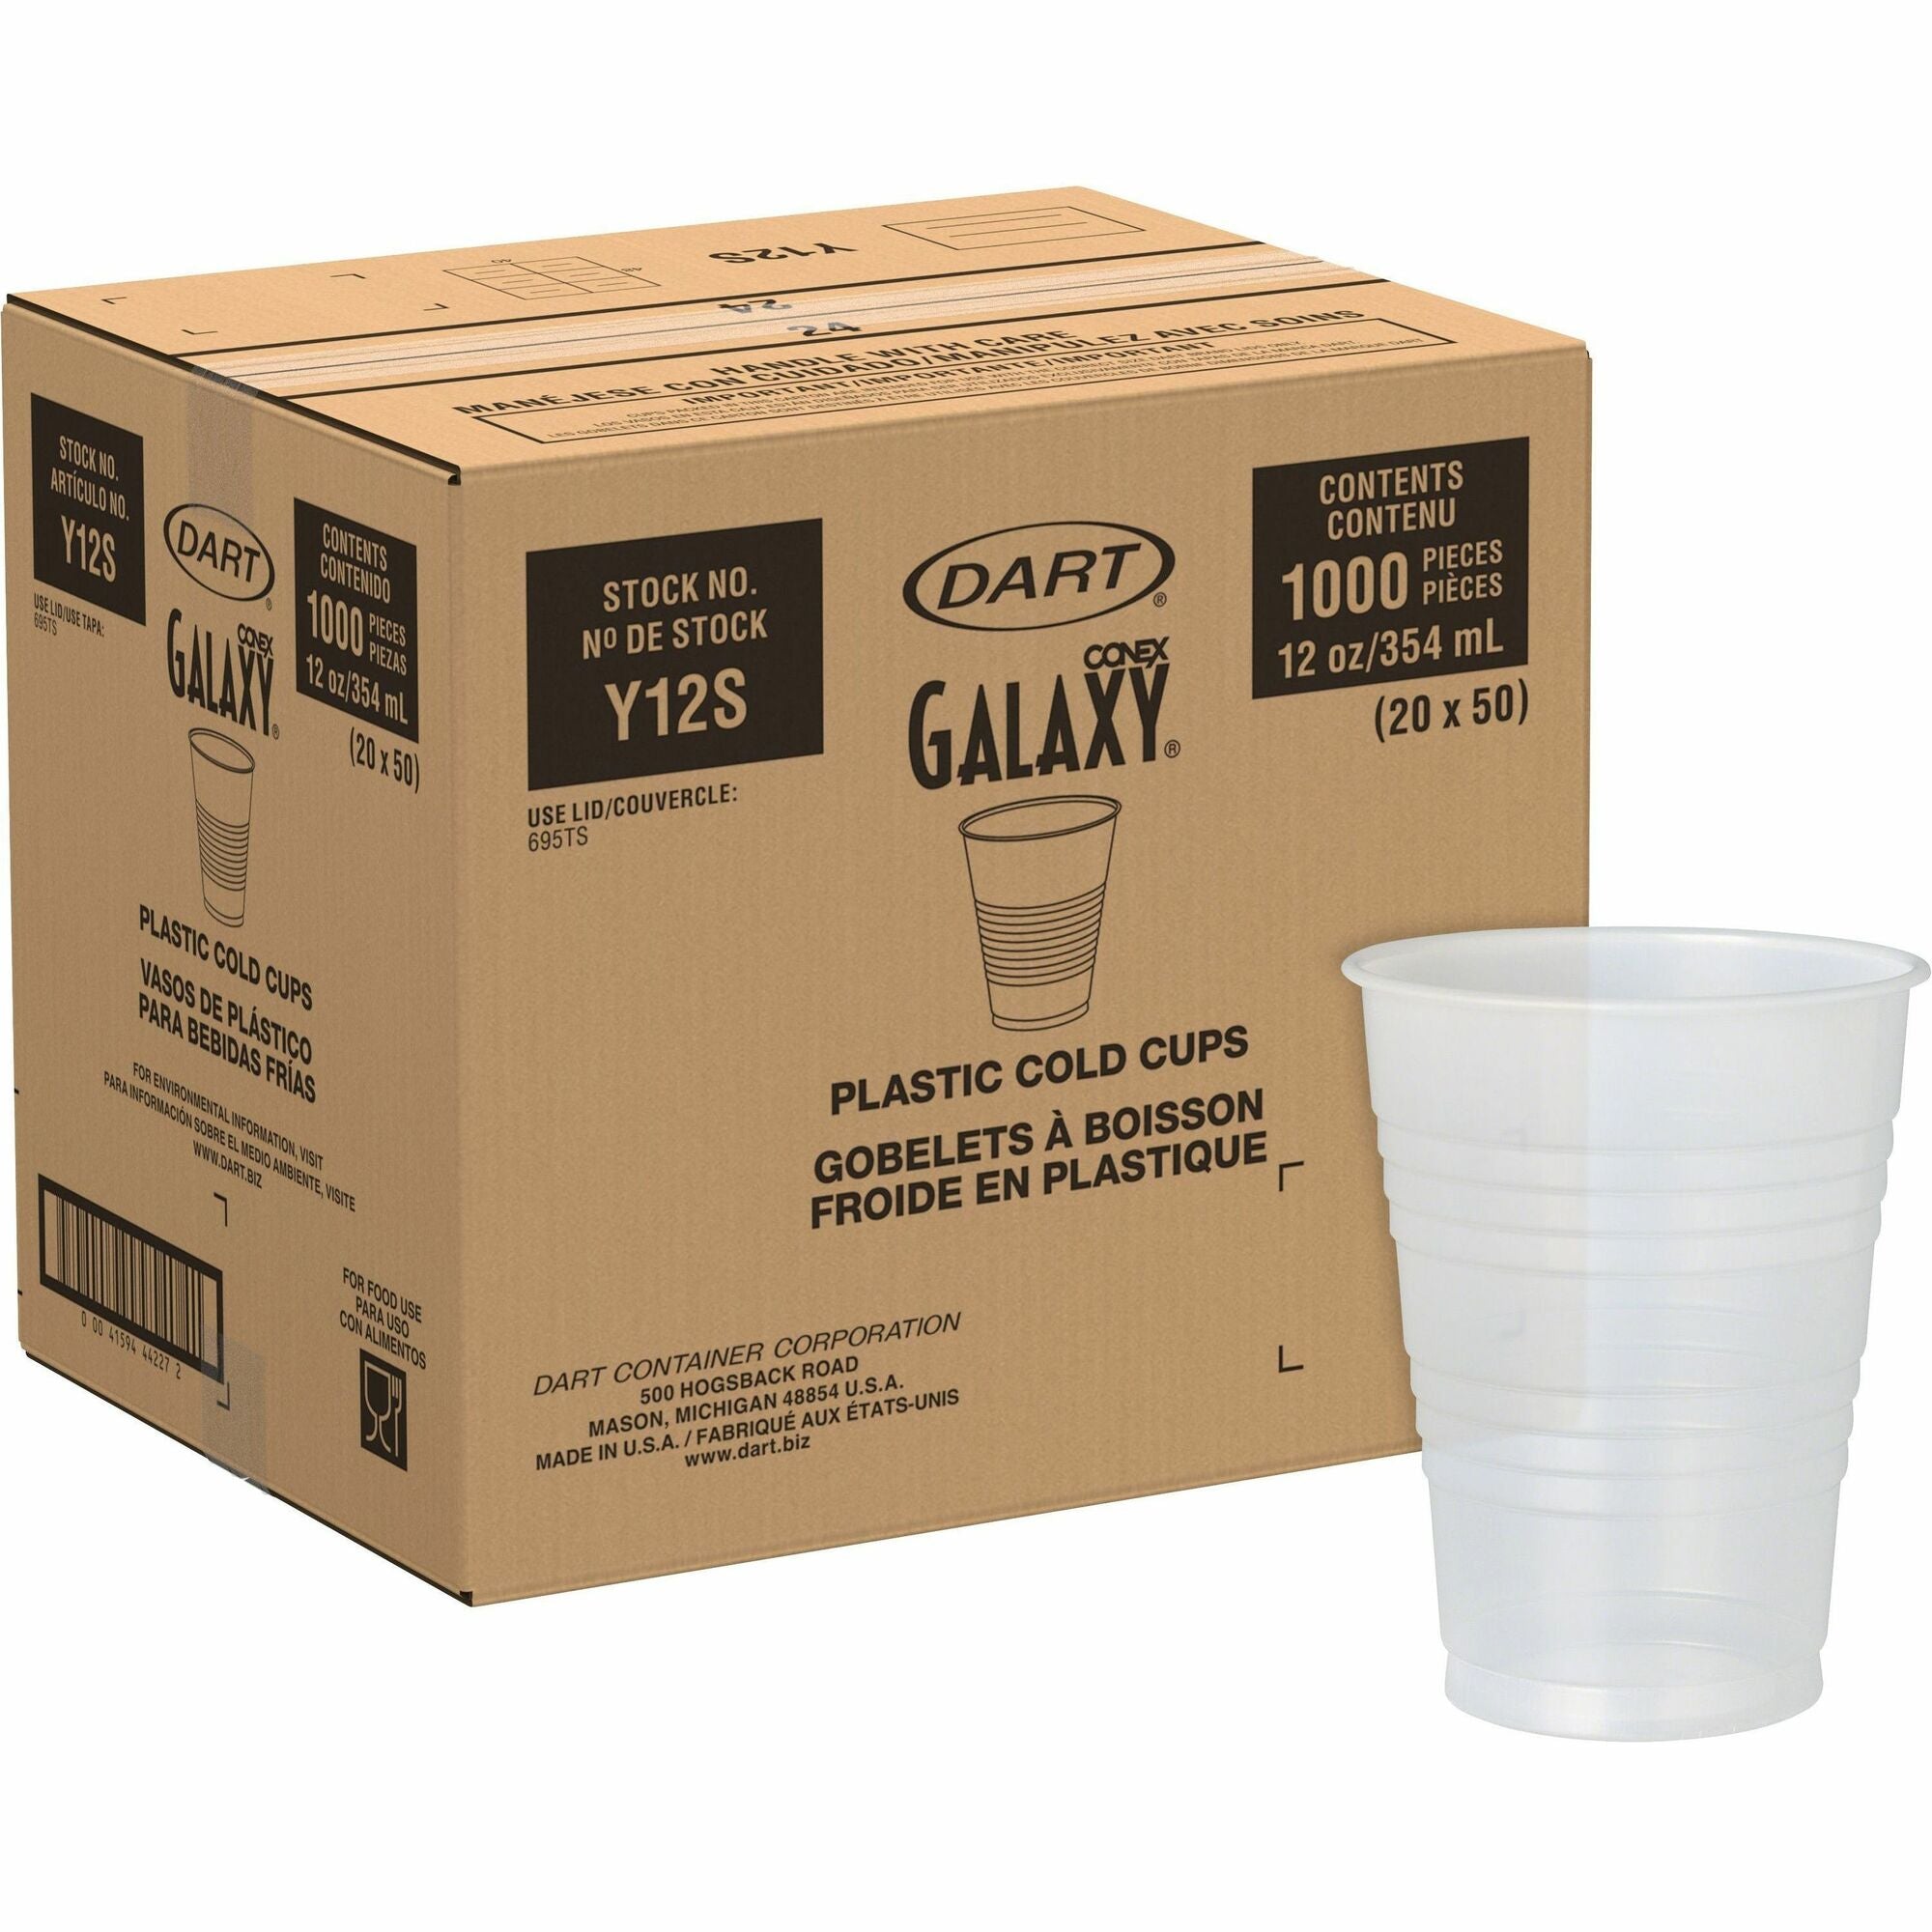 Solo Galaxy 12 oz Plastic Cold Cups - 50.0 / Bag - 20 / Carton - Translucent - Plastic, Polystyrene - Cold Drink